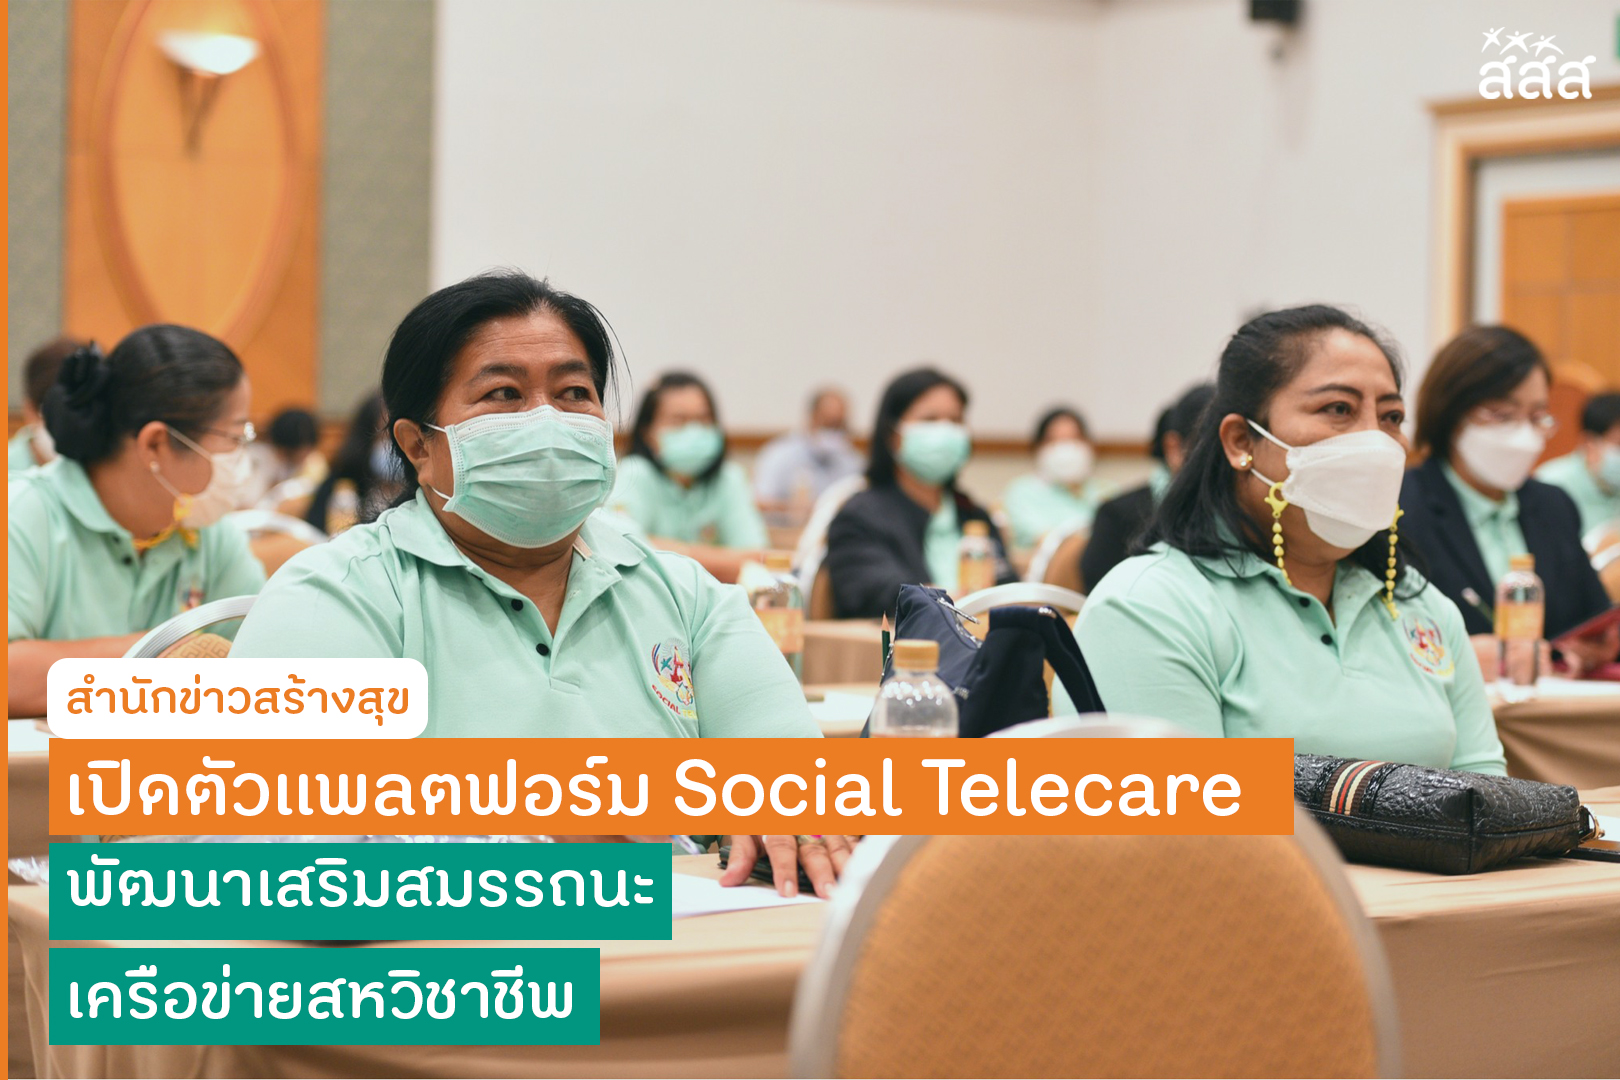 Social Telecare platform established to enhance multidisciplinary network thaihealth